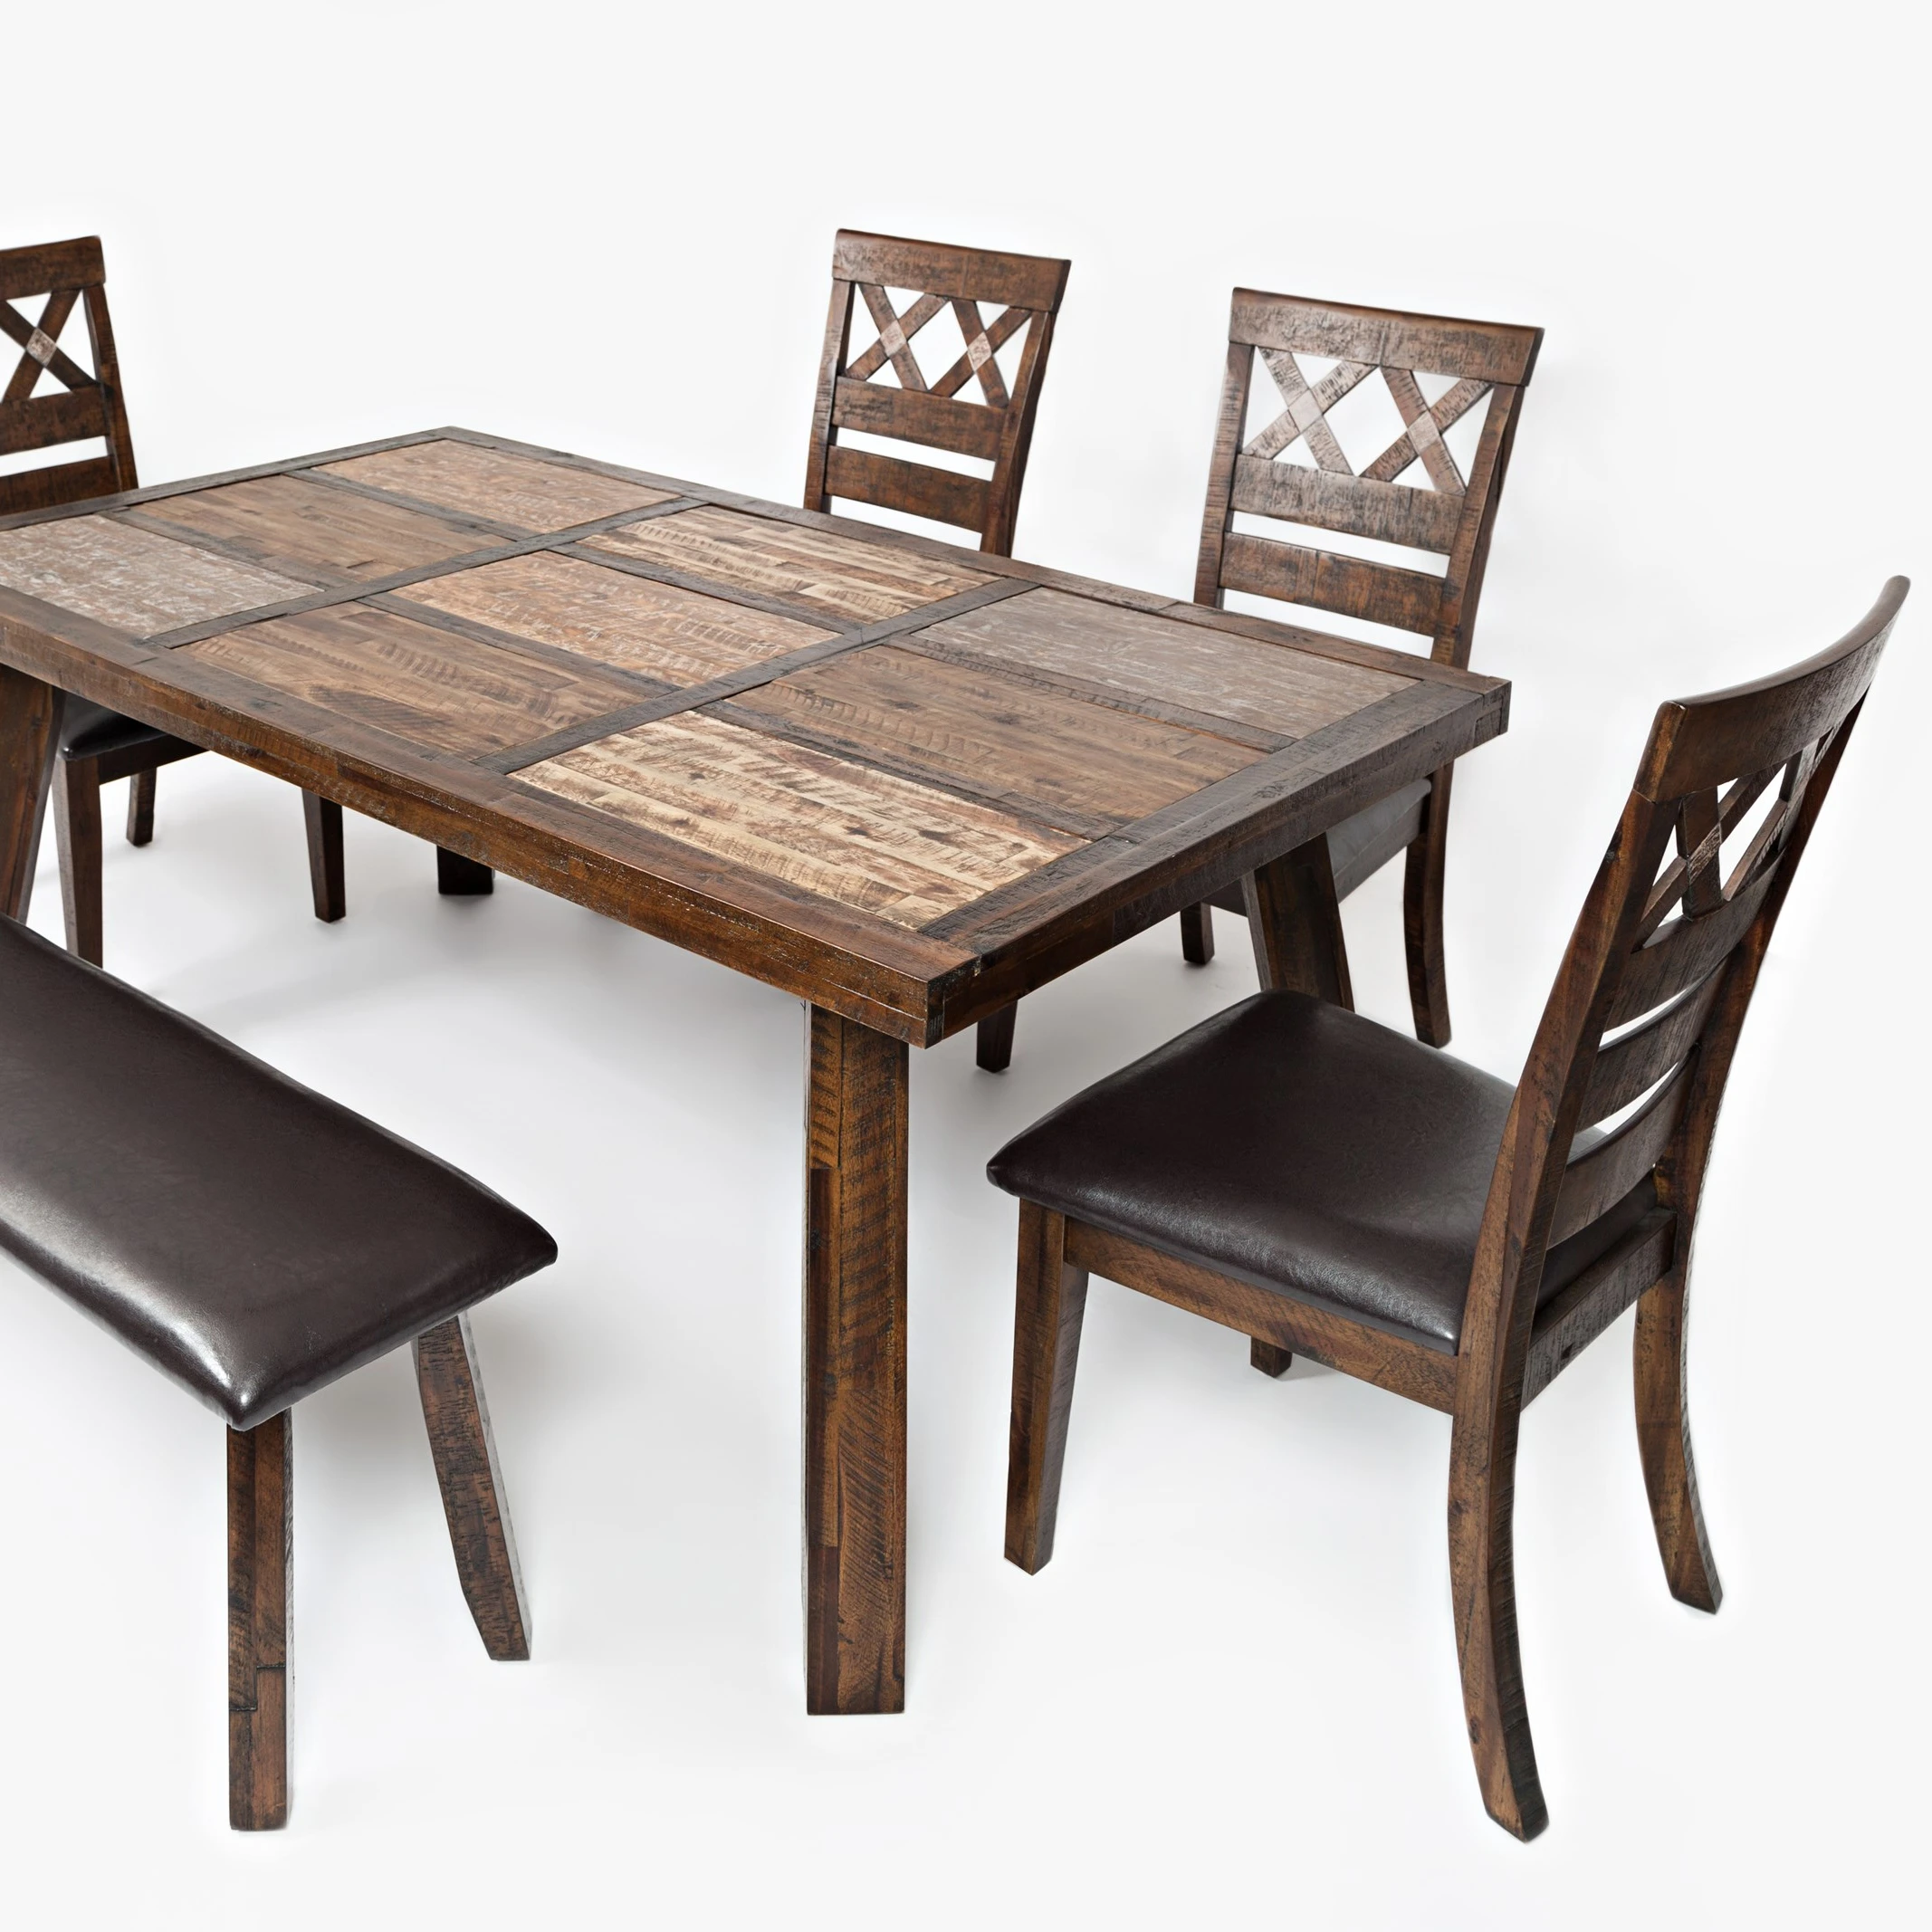 Industri Pabrik Empat Kursi Satu Bangku 6 Buah Meja Makan Kayu Solid Set Modern Buy Natural Polished Four Chairs One Bench Wooden Dining Table